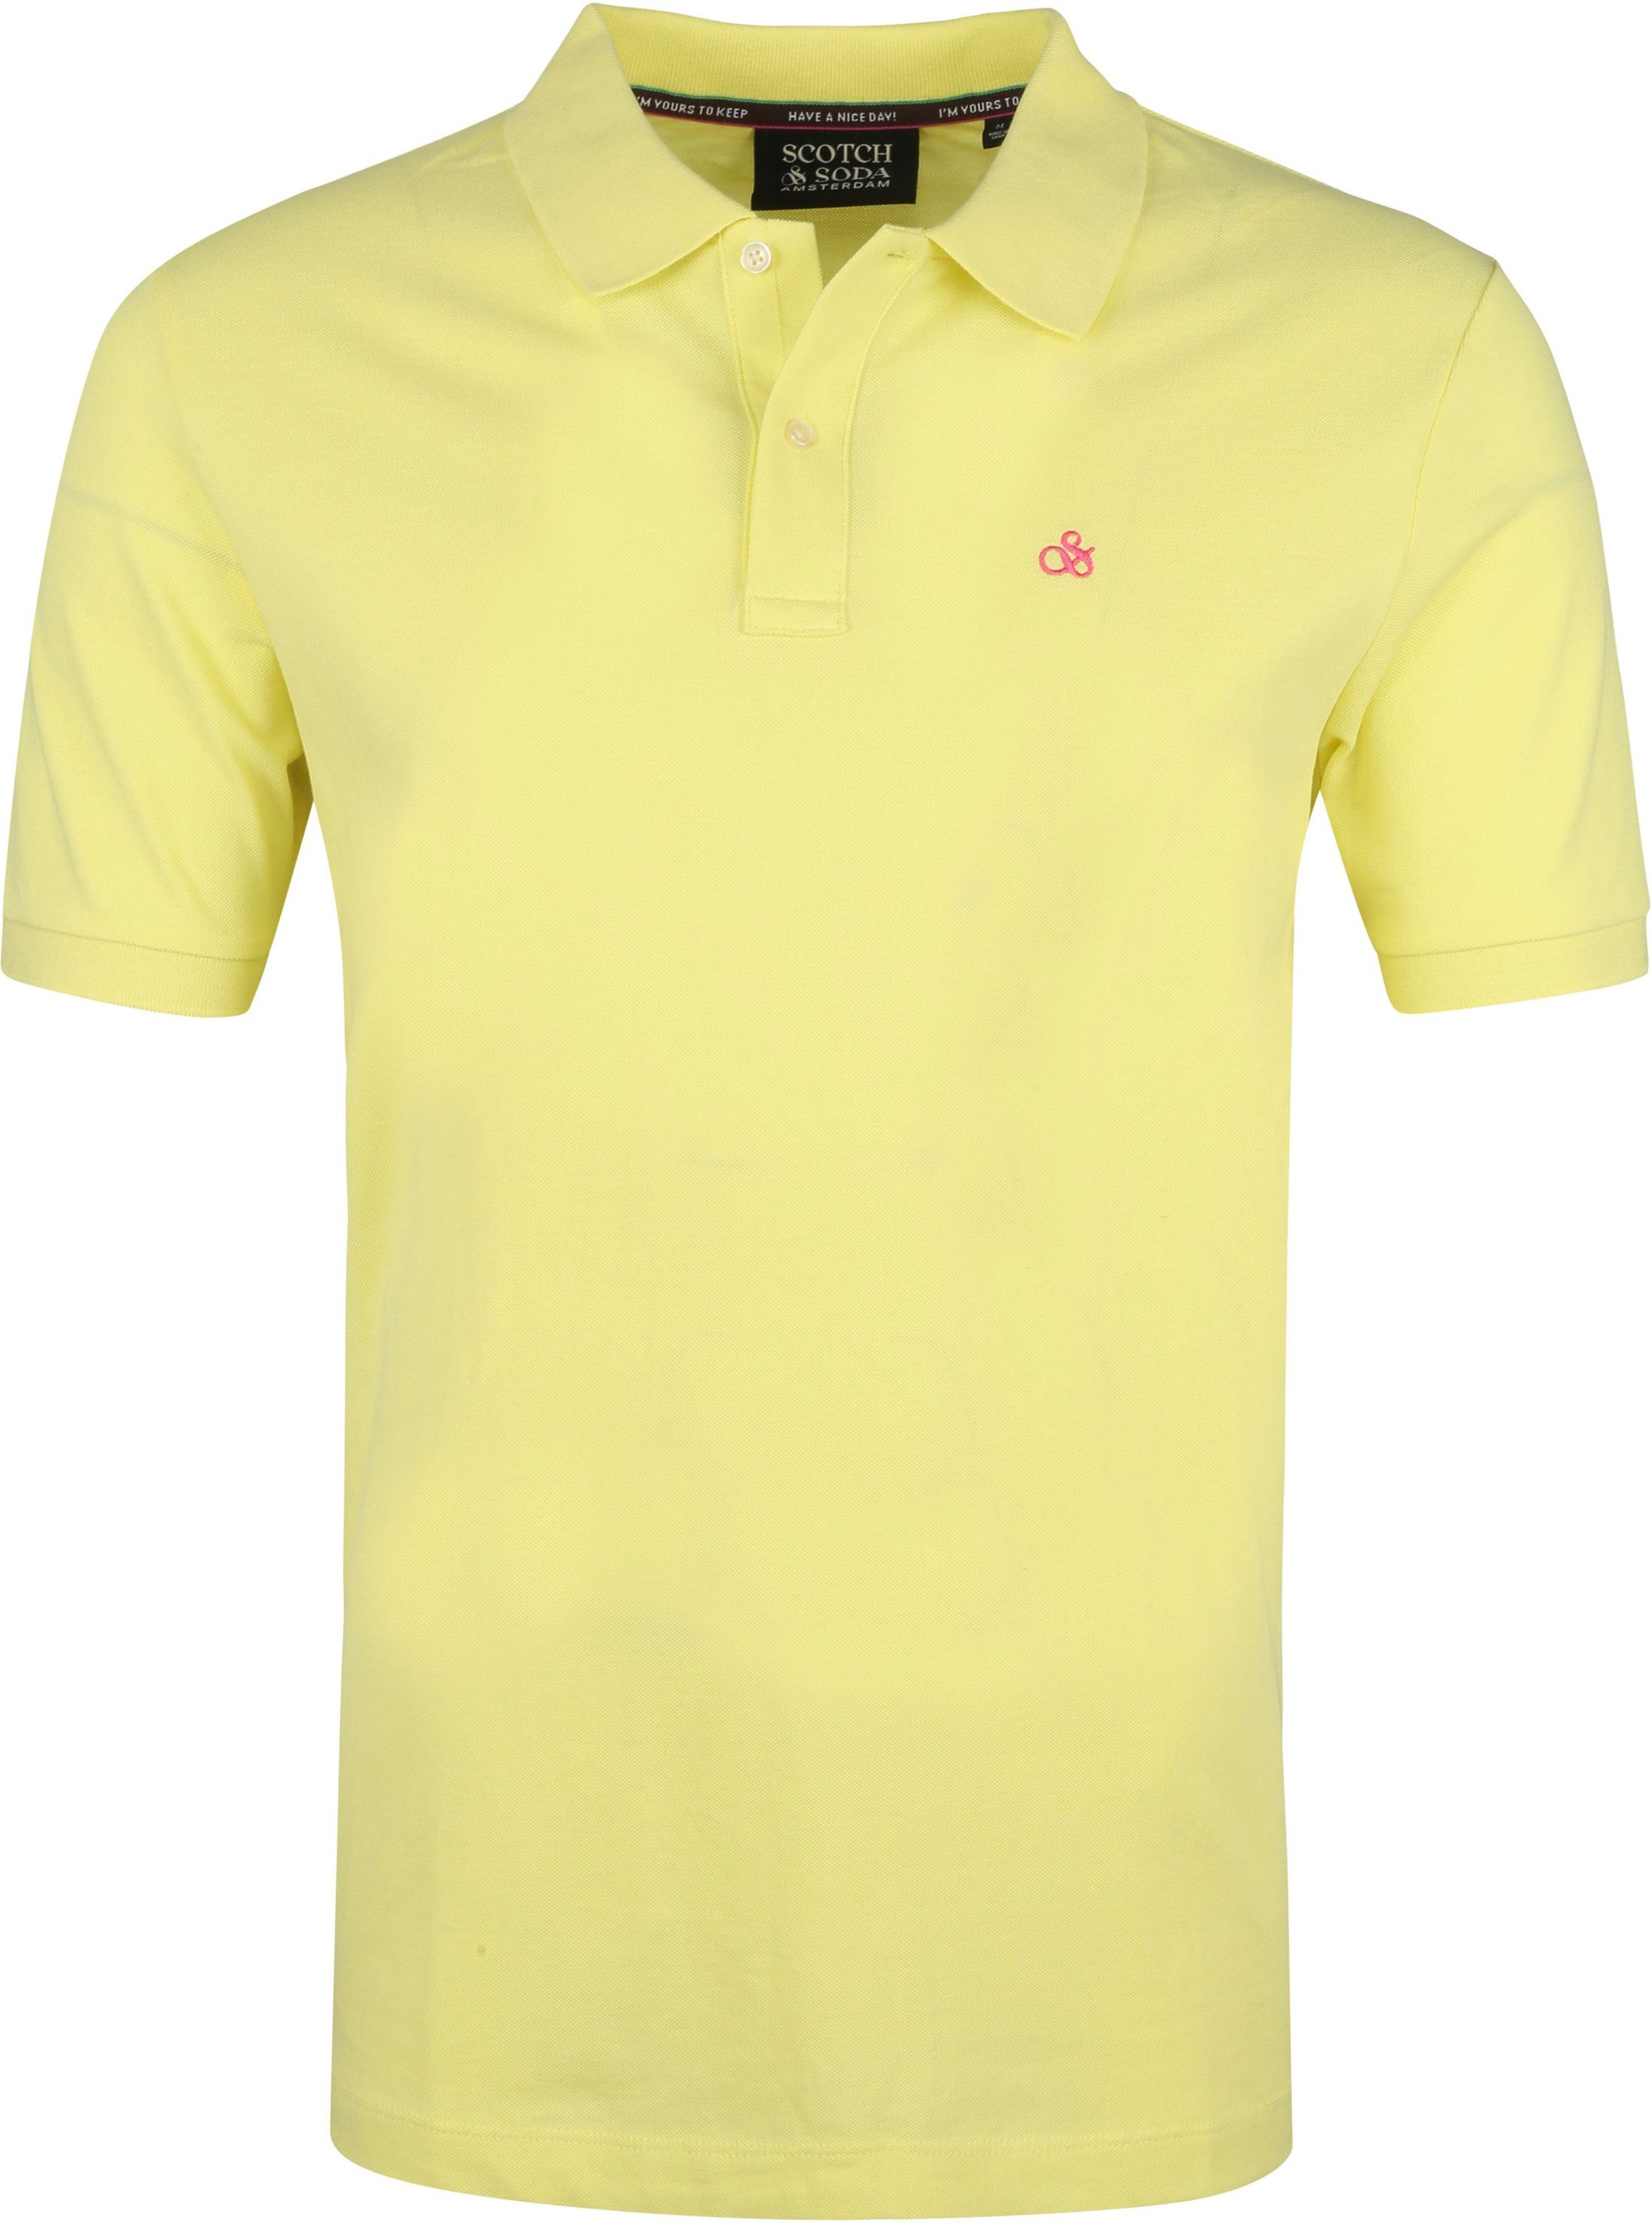 Scotch and Soda Pique Polo Shirt Yellow size M